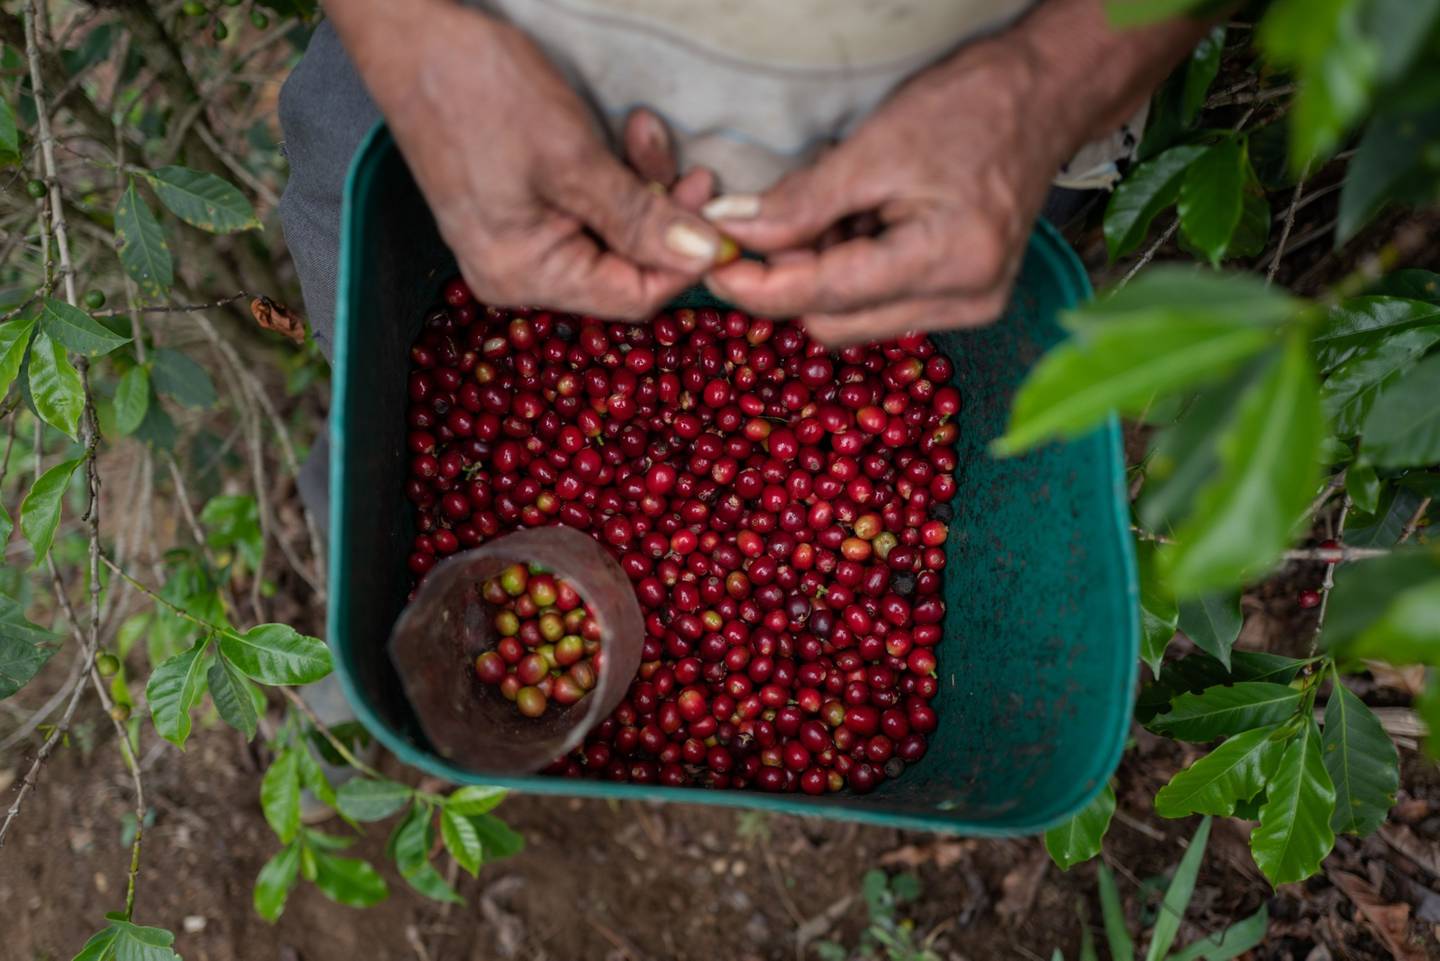 Granos de café recogidos a mano durante la cosecha. Fotógrafo: Juan Cristobal Cobo / Bloombergdfd